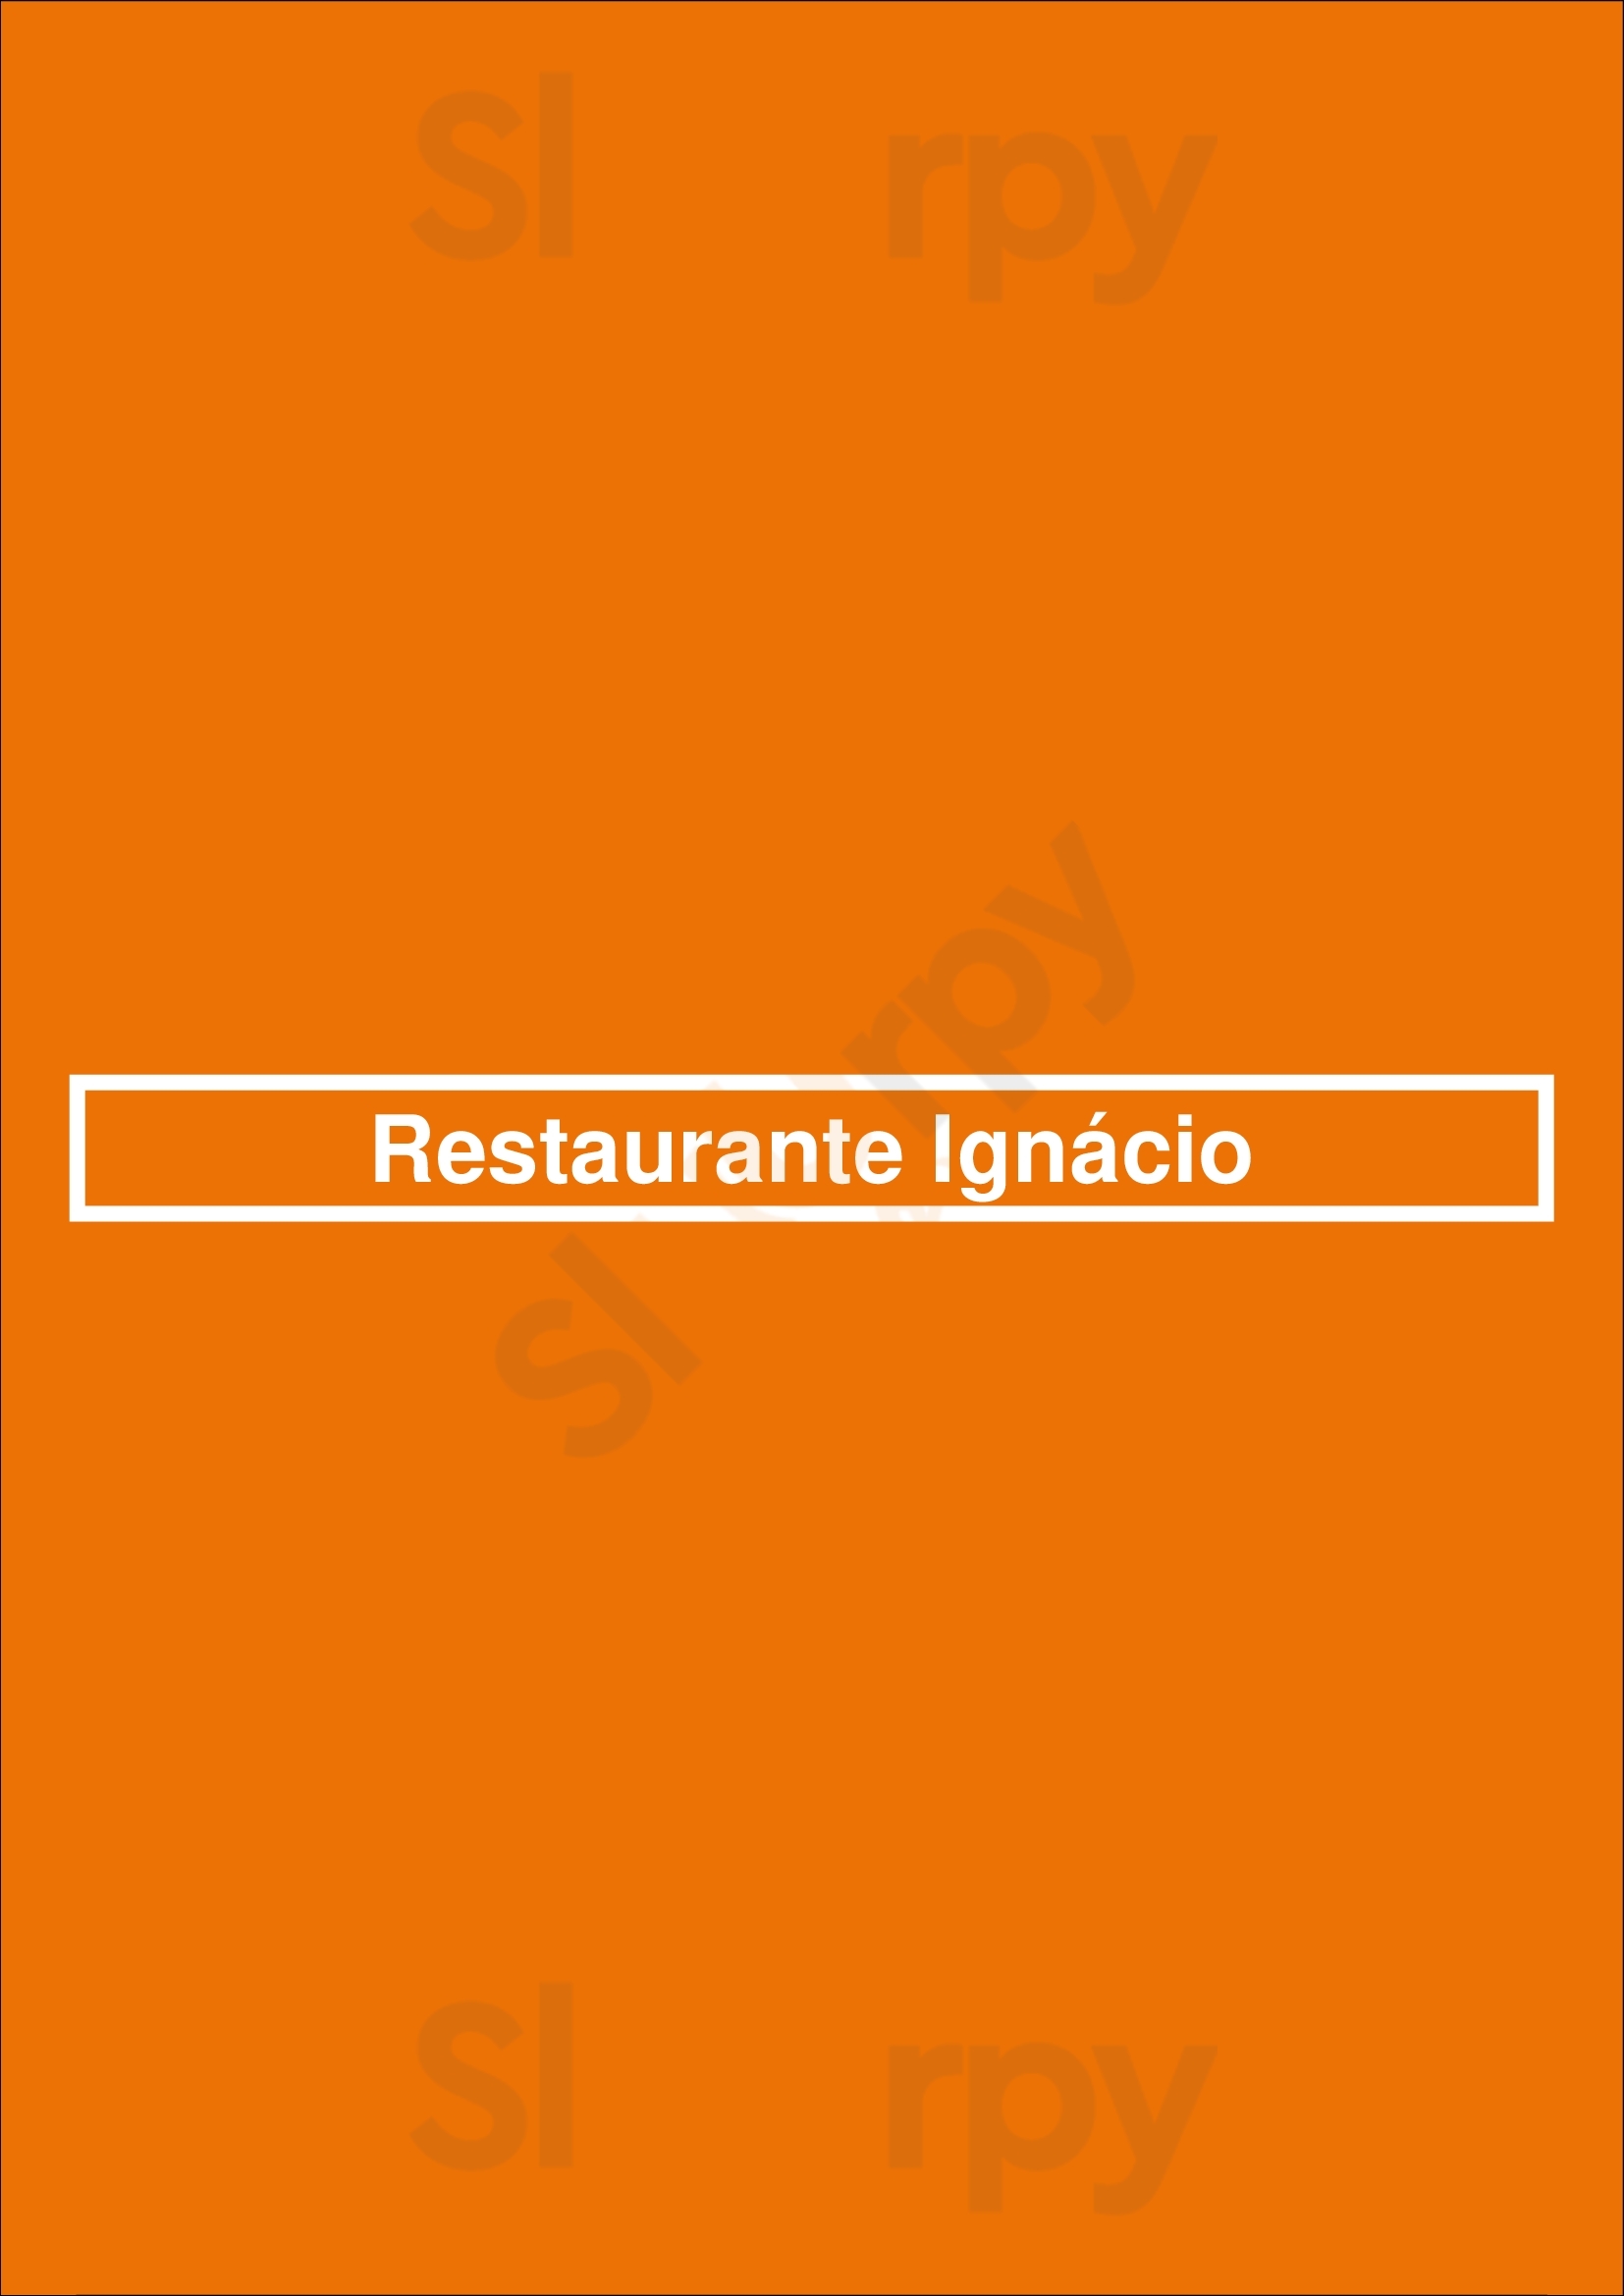 Restaurante Ignácio Braga Menu - 1